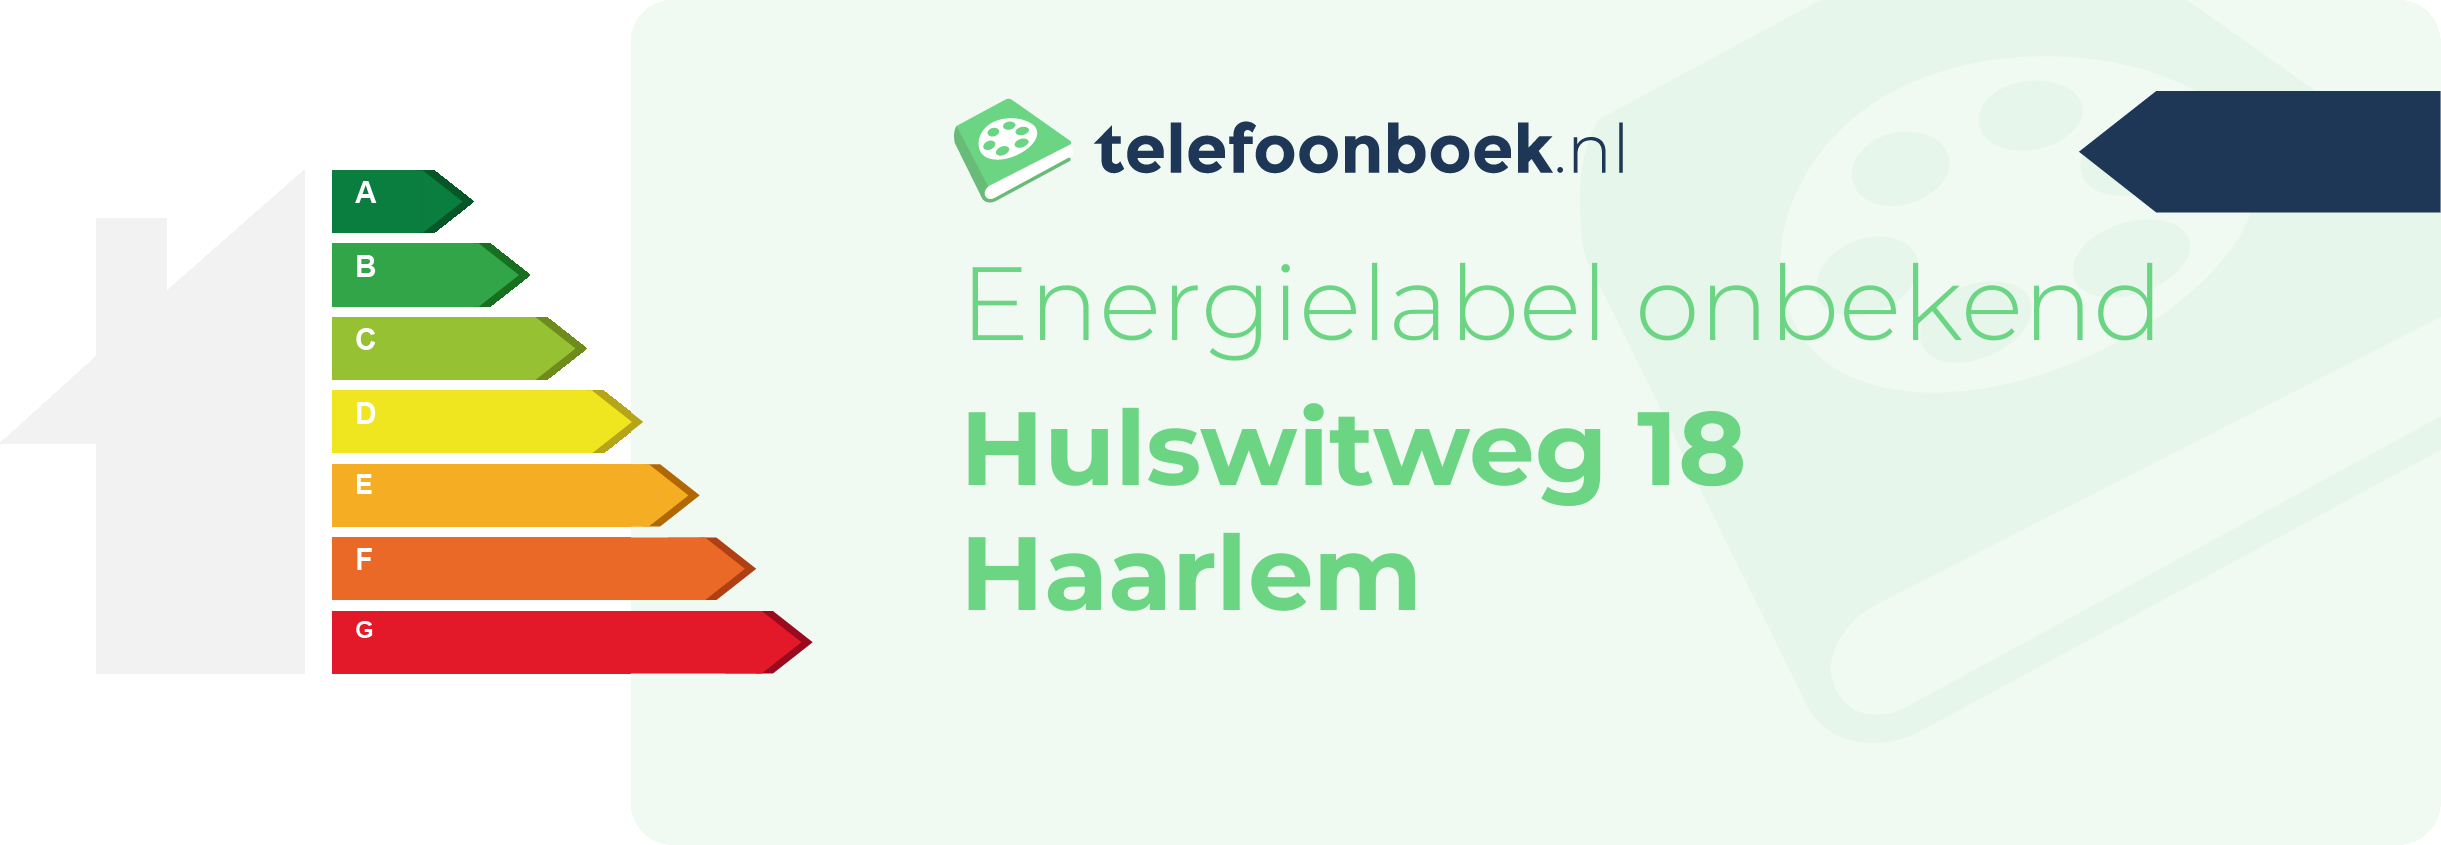 Energielabel Hulswitweg 18 Haarlem